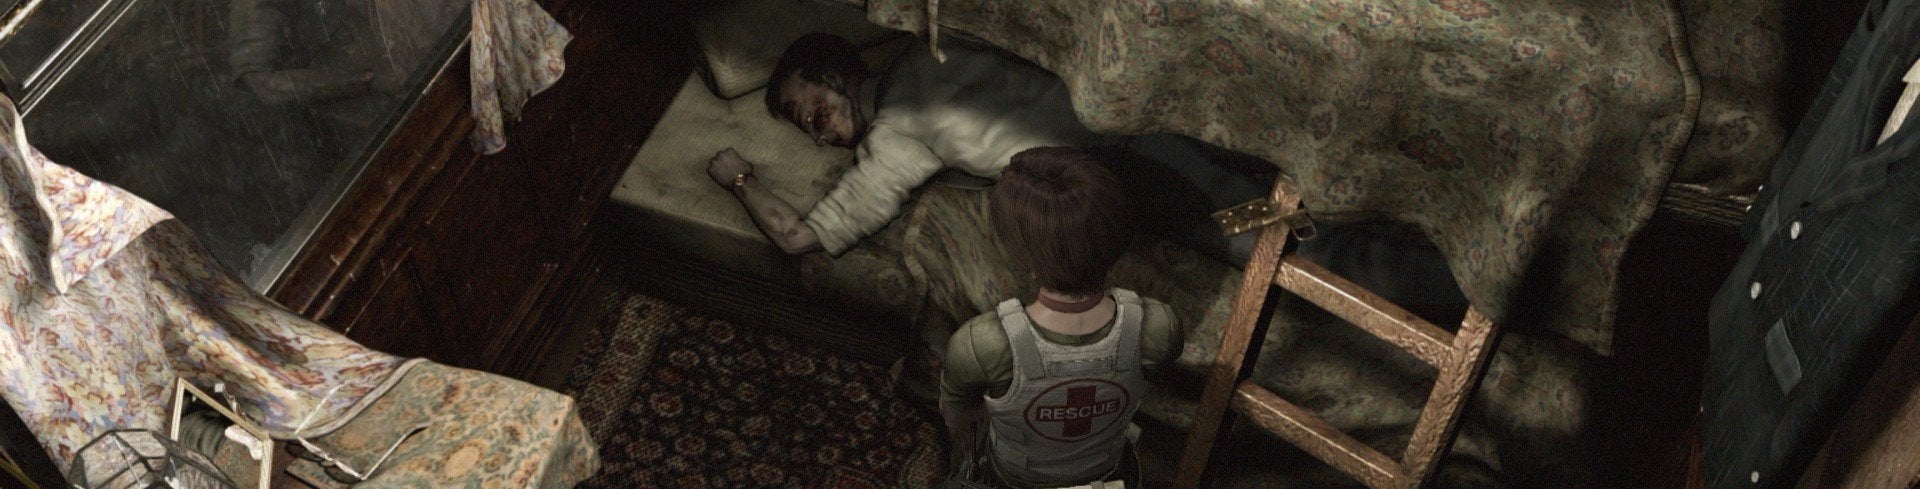 Image for Resident Evil Zero review